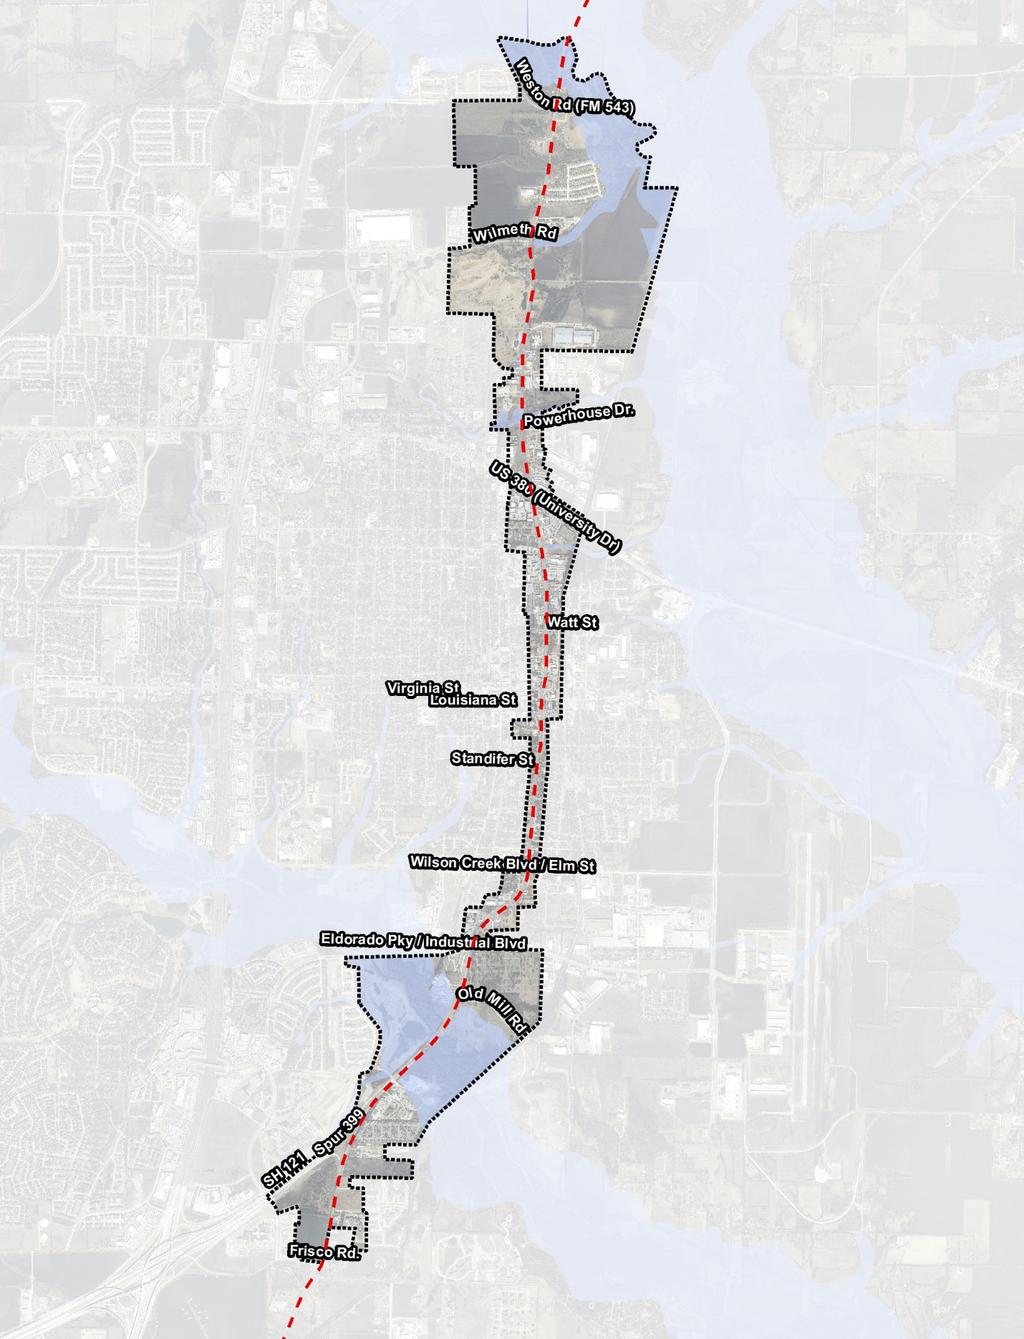 State Highway 5 Corridor Context Sensitive Master Plan ADOPTED